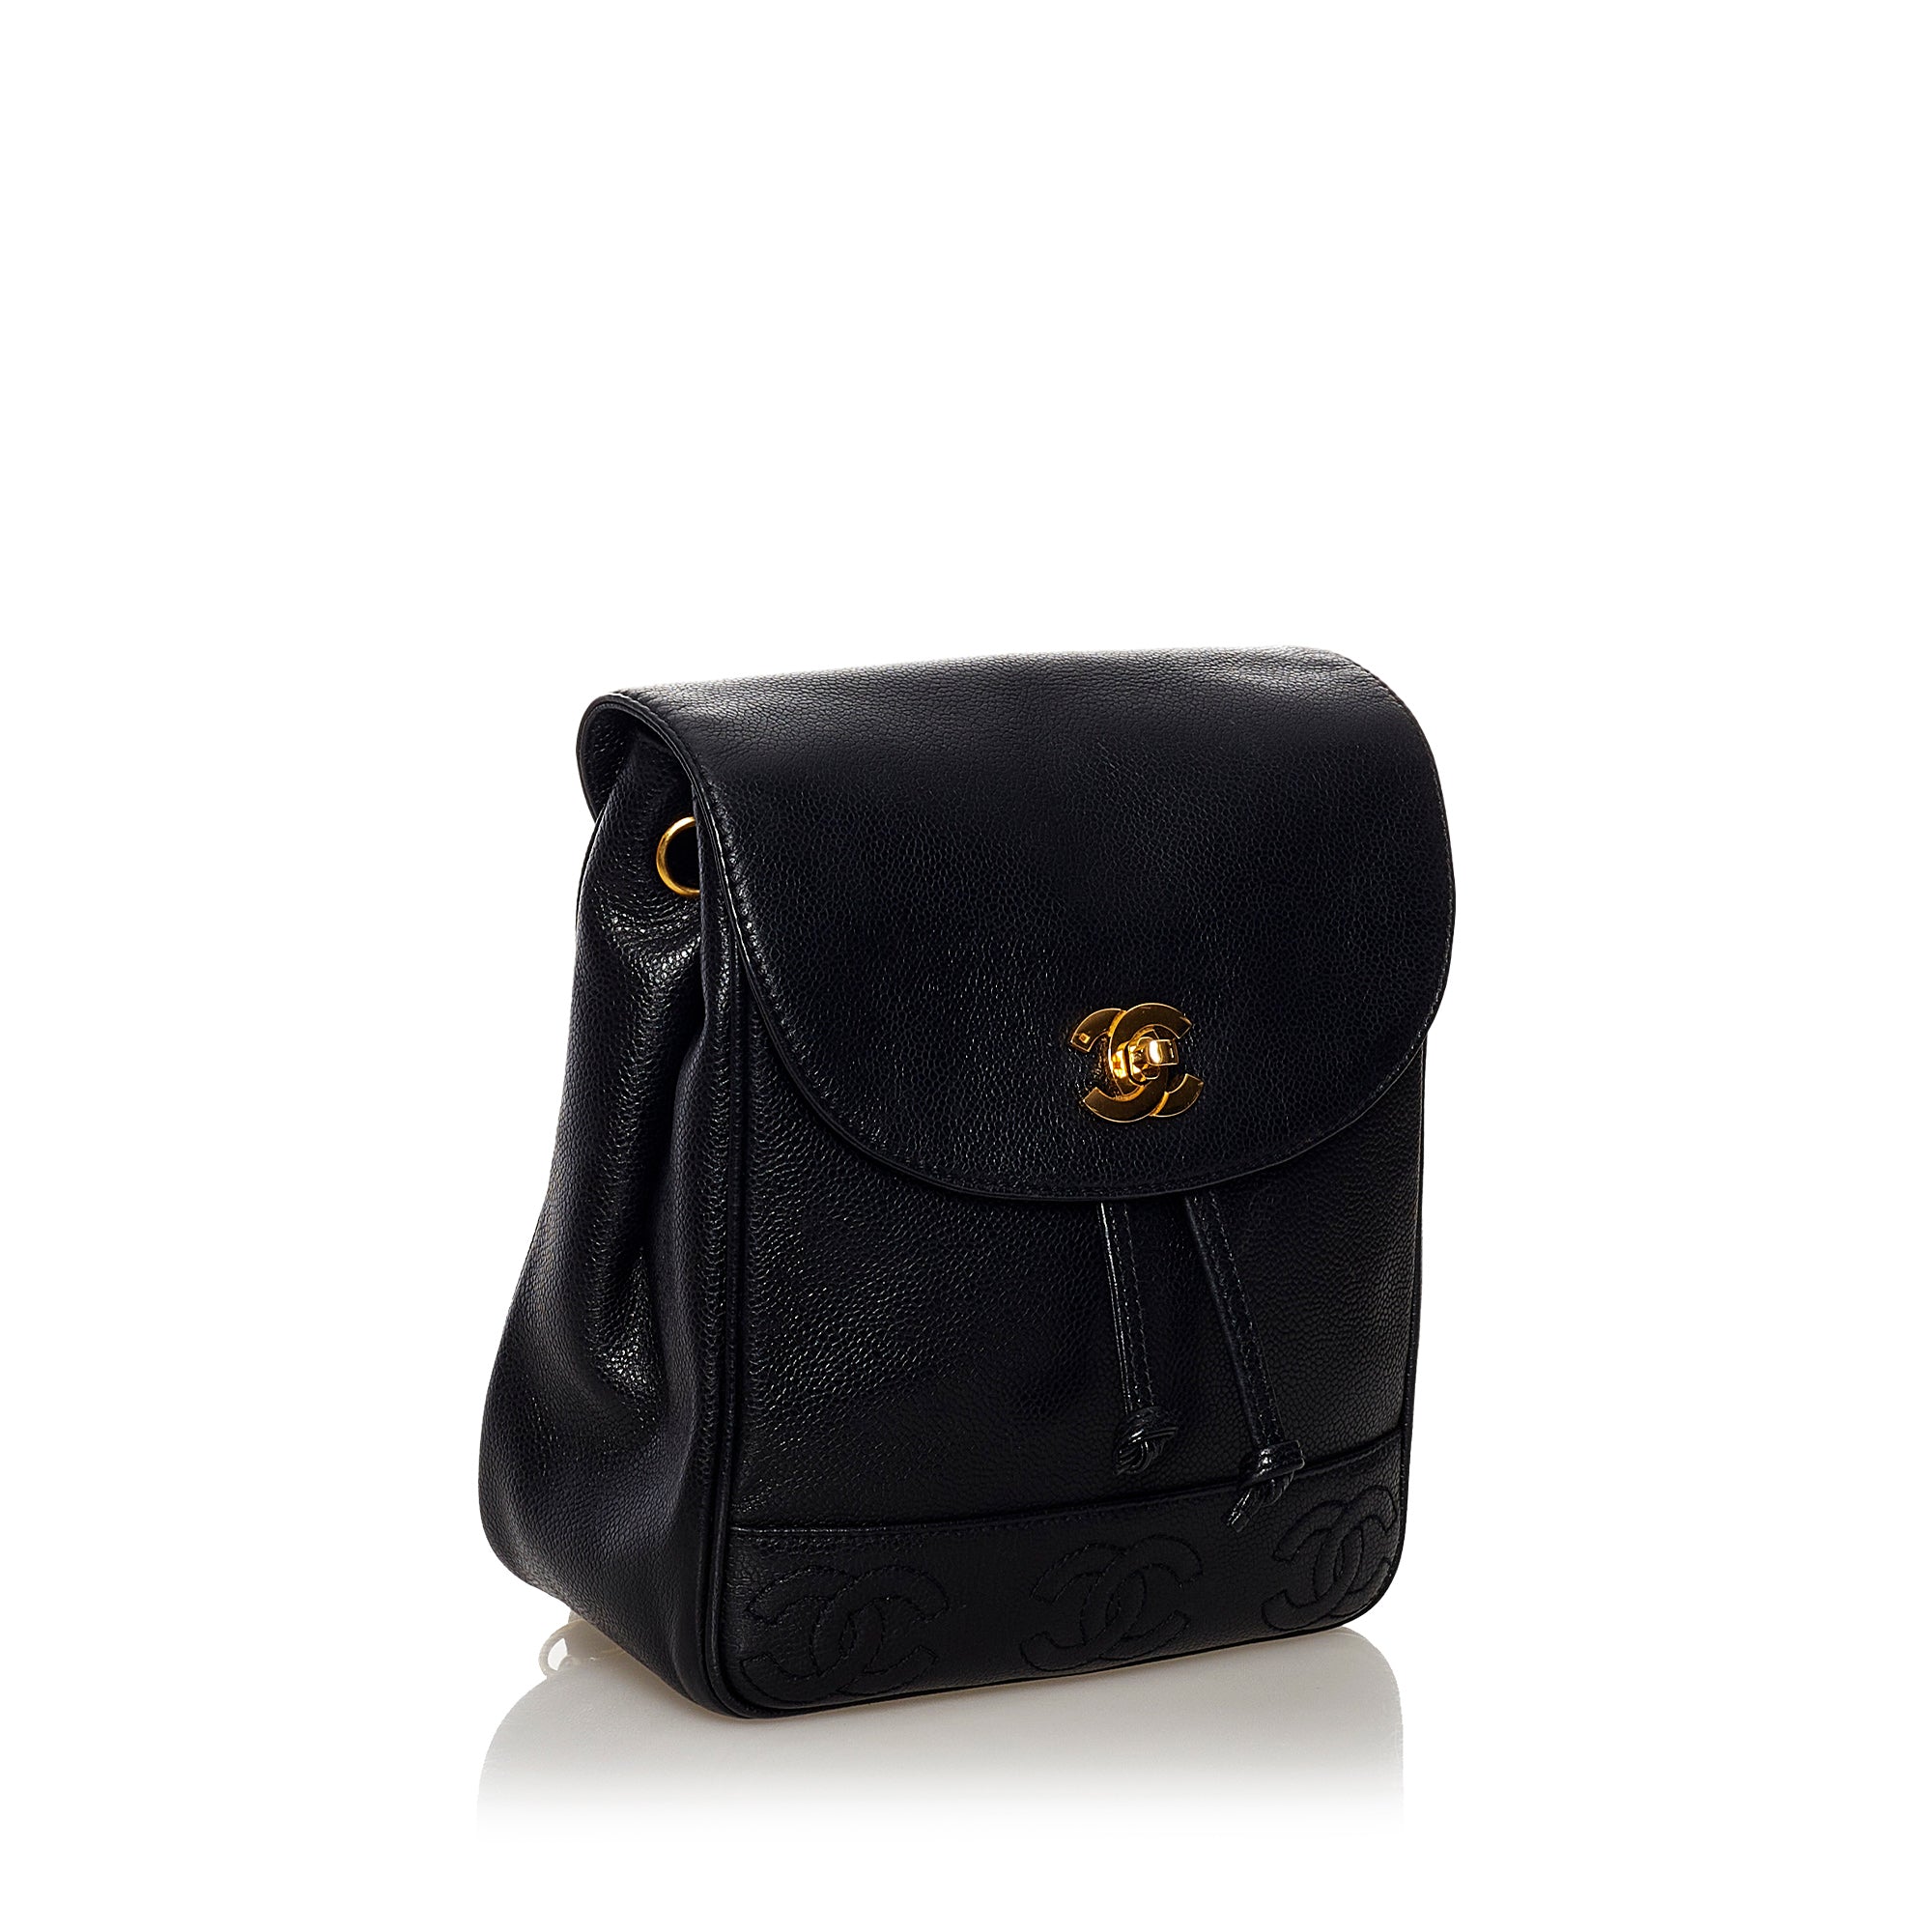 Black Chanel Caviar Handbag